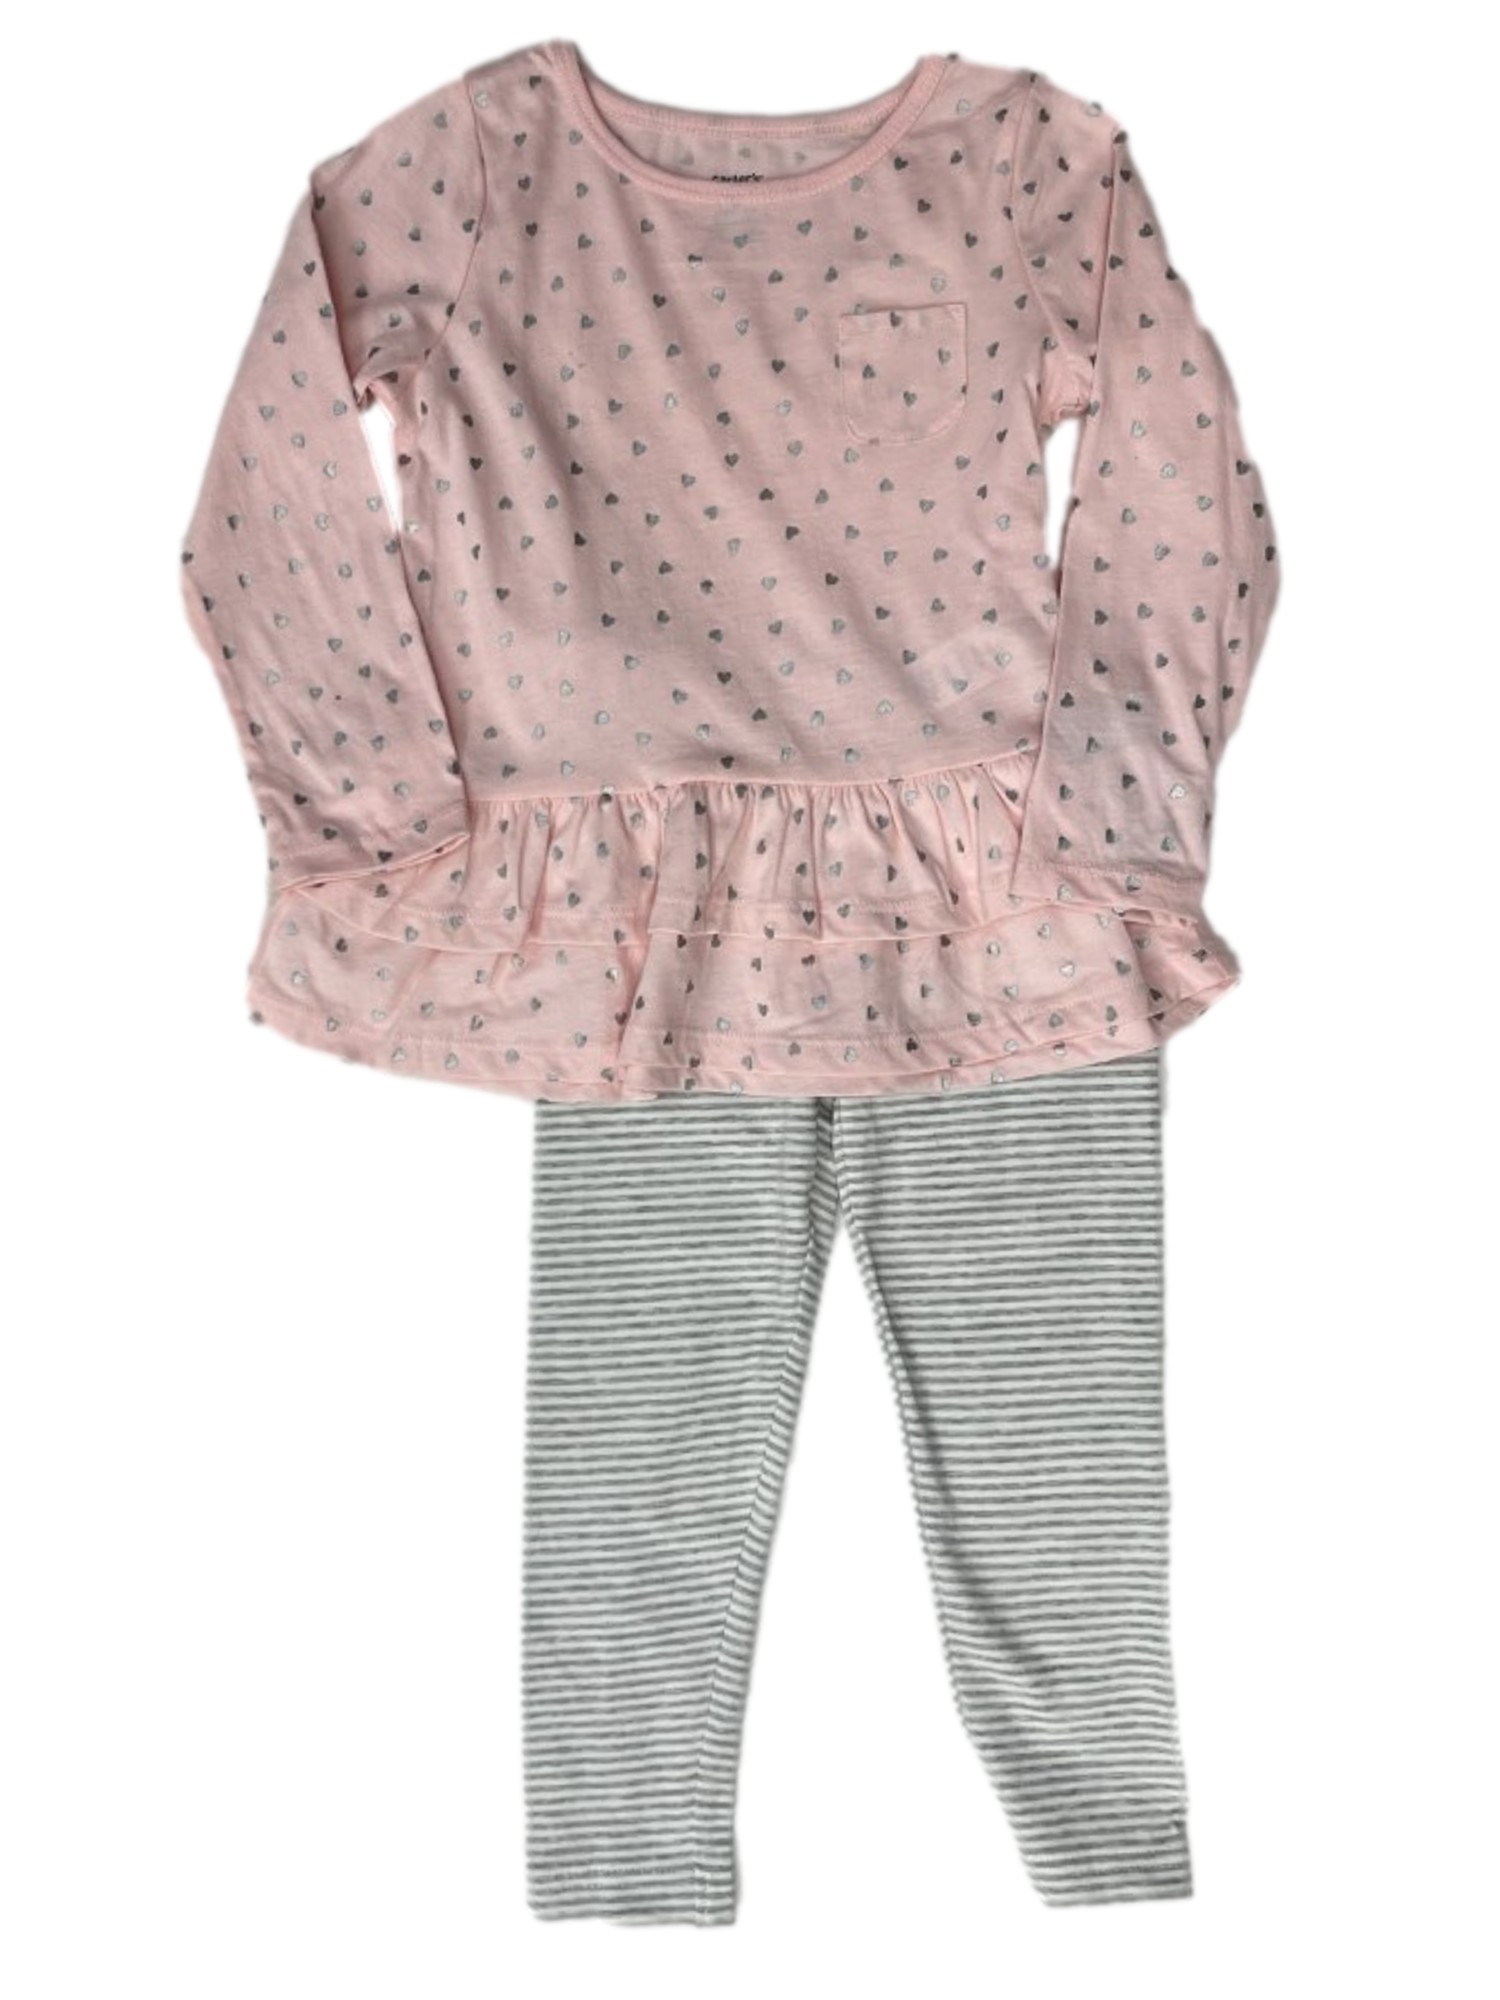 Carter's Carters Infant Girls Pink Heart Long Sleeve Top & Striped Pants Set 24 Months